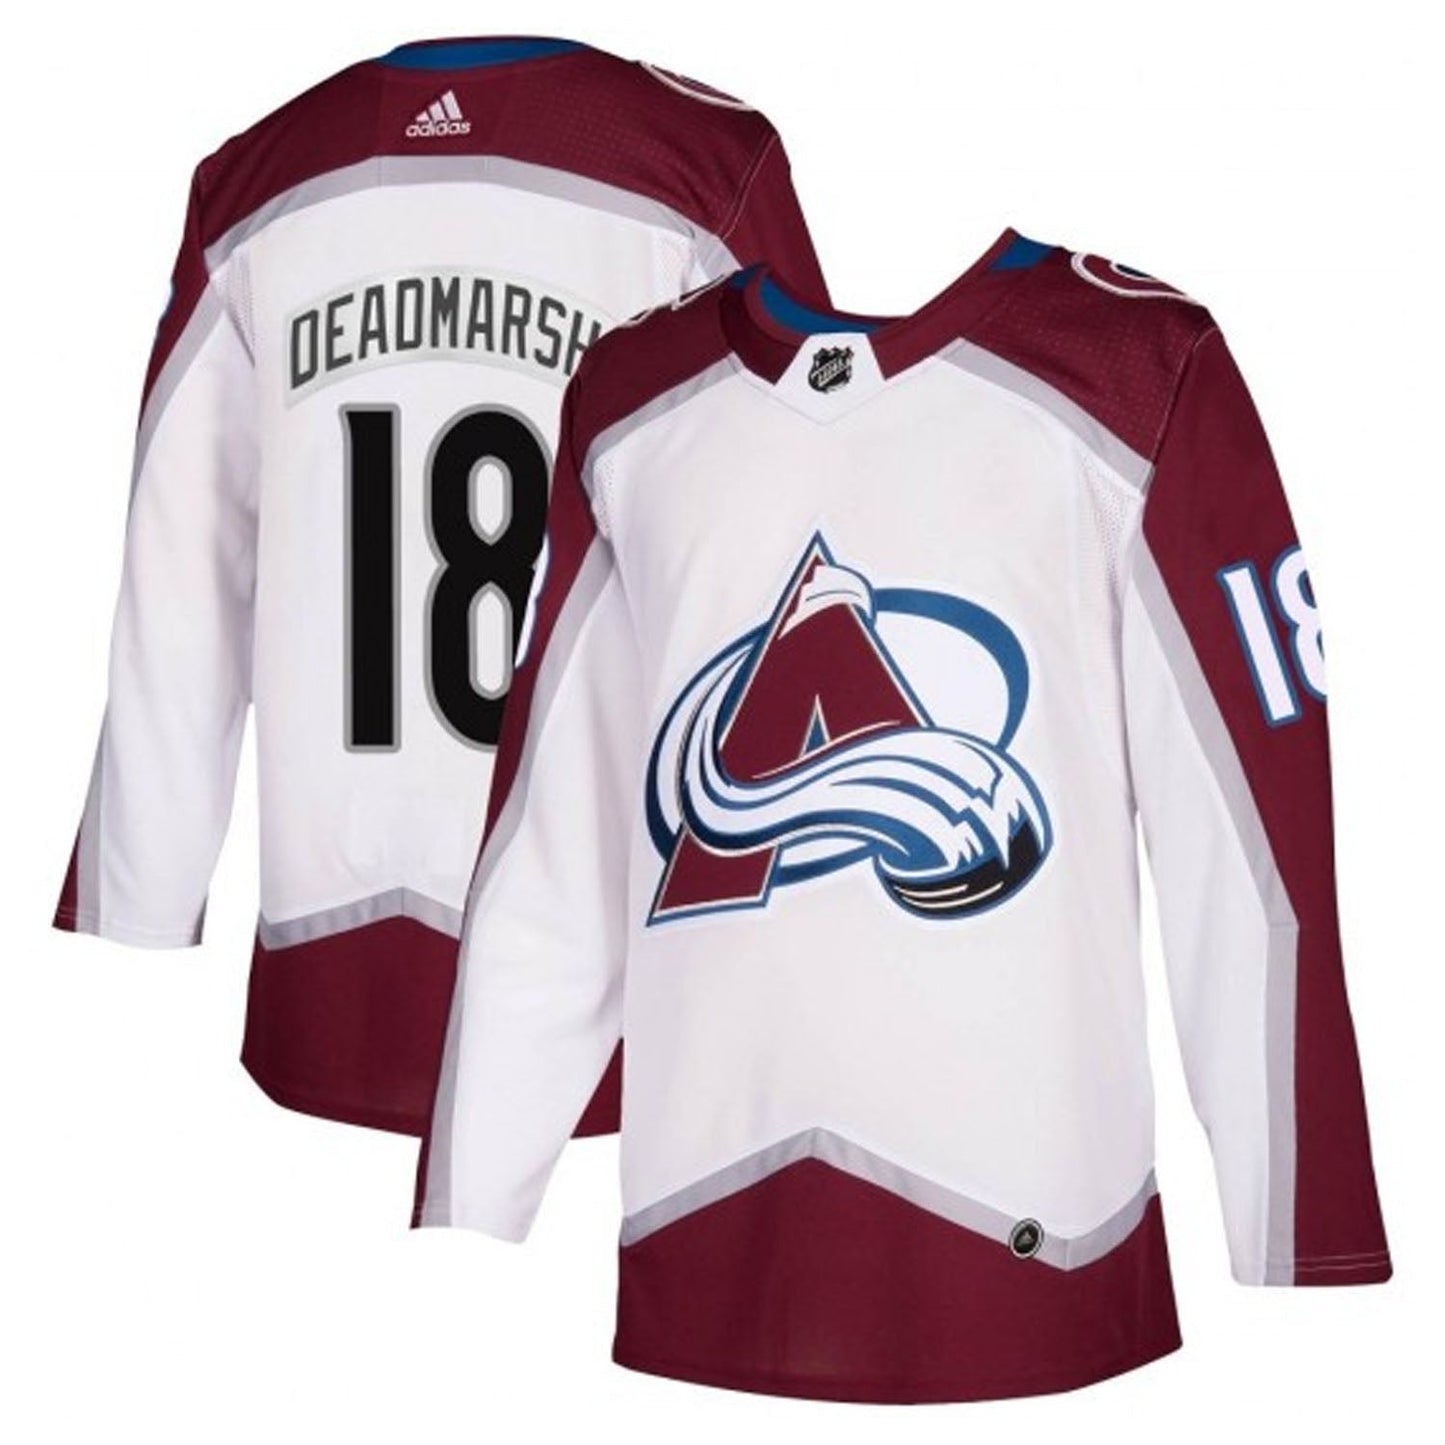 NHL Adam Deadmarsh Colorado Avalanche 18 Jersey